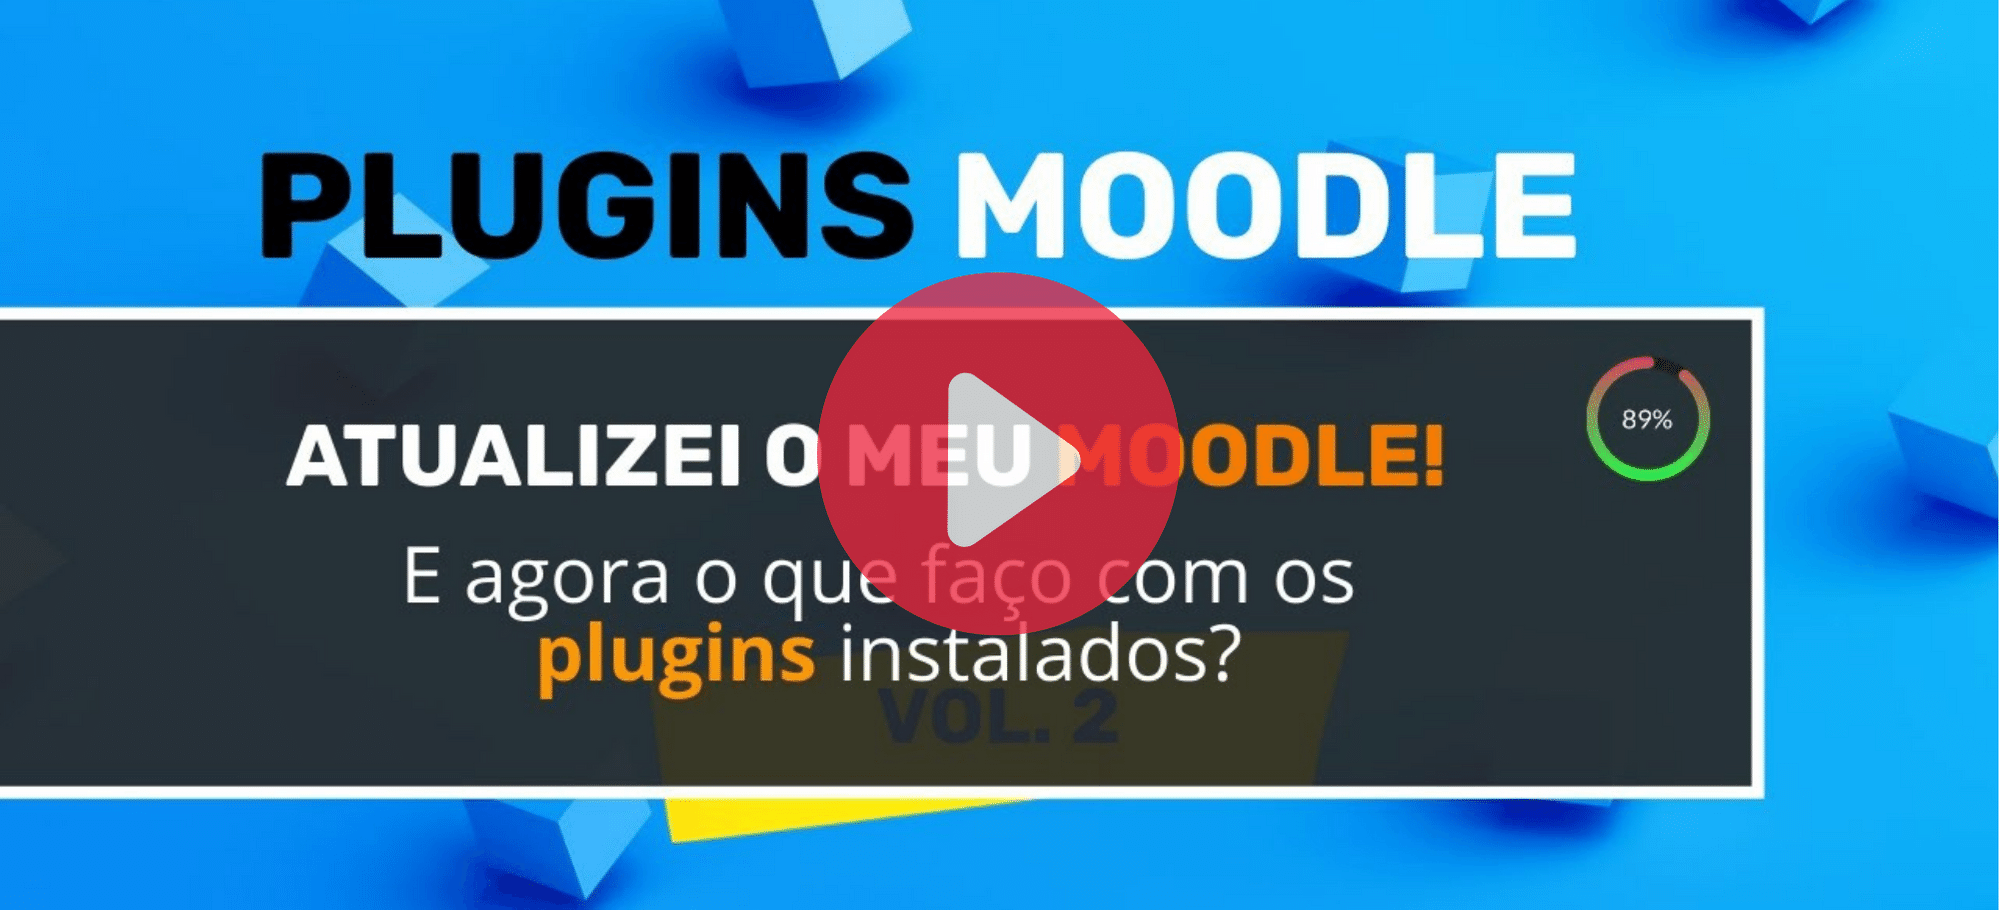 plugins moodle play